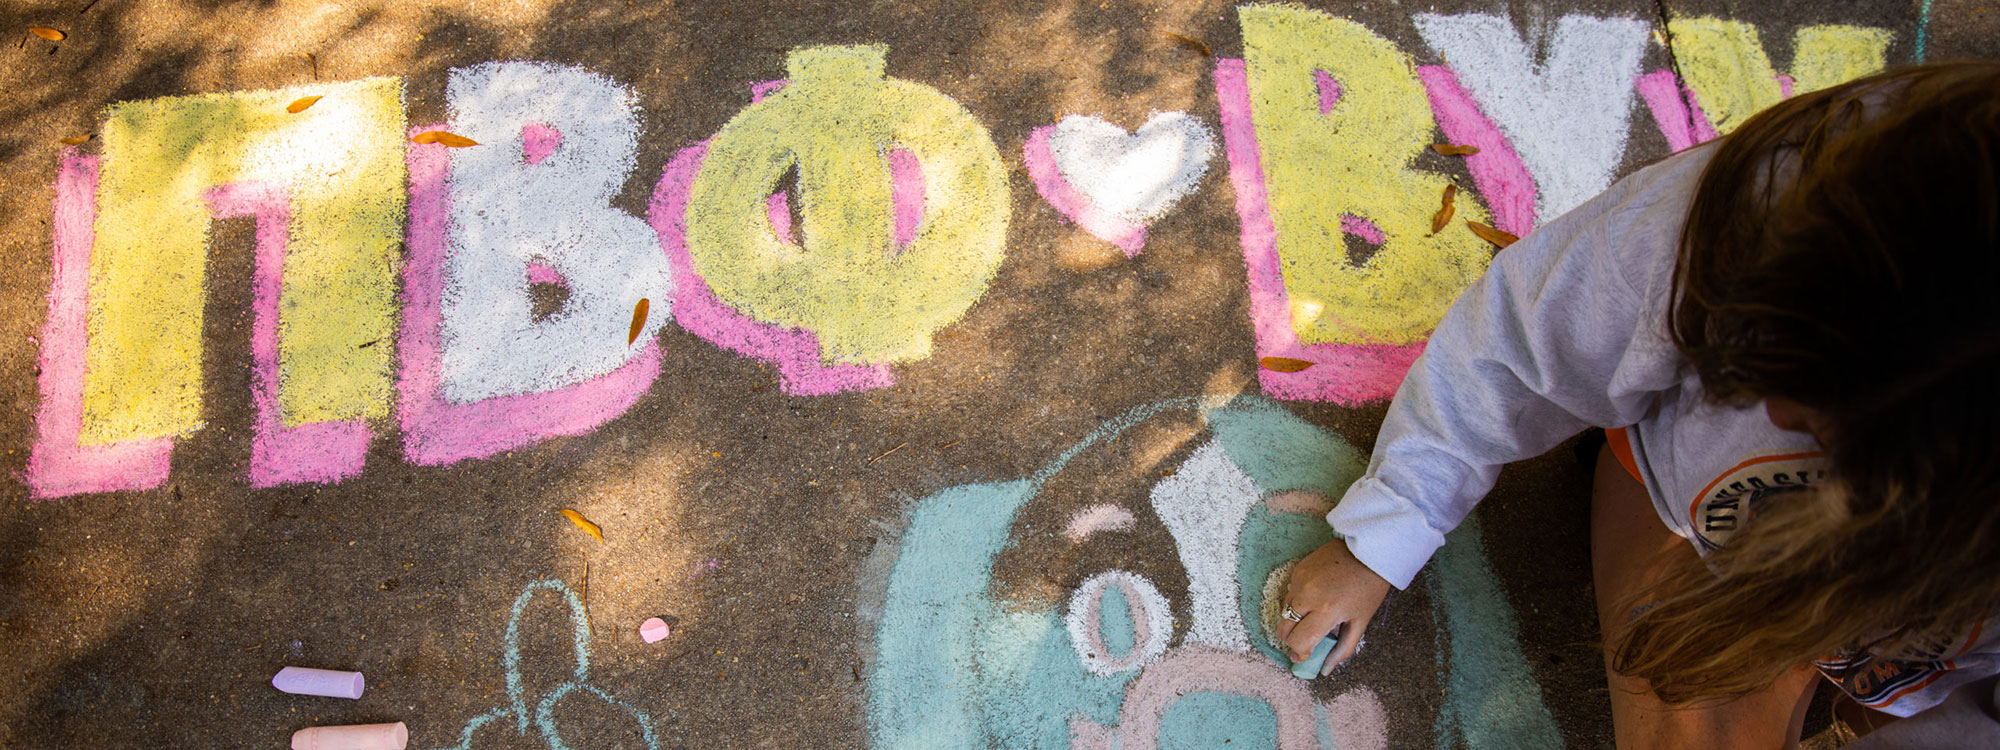 Students decorate Ped walkway with Smokey chalk art